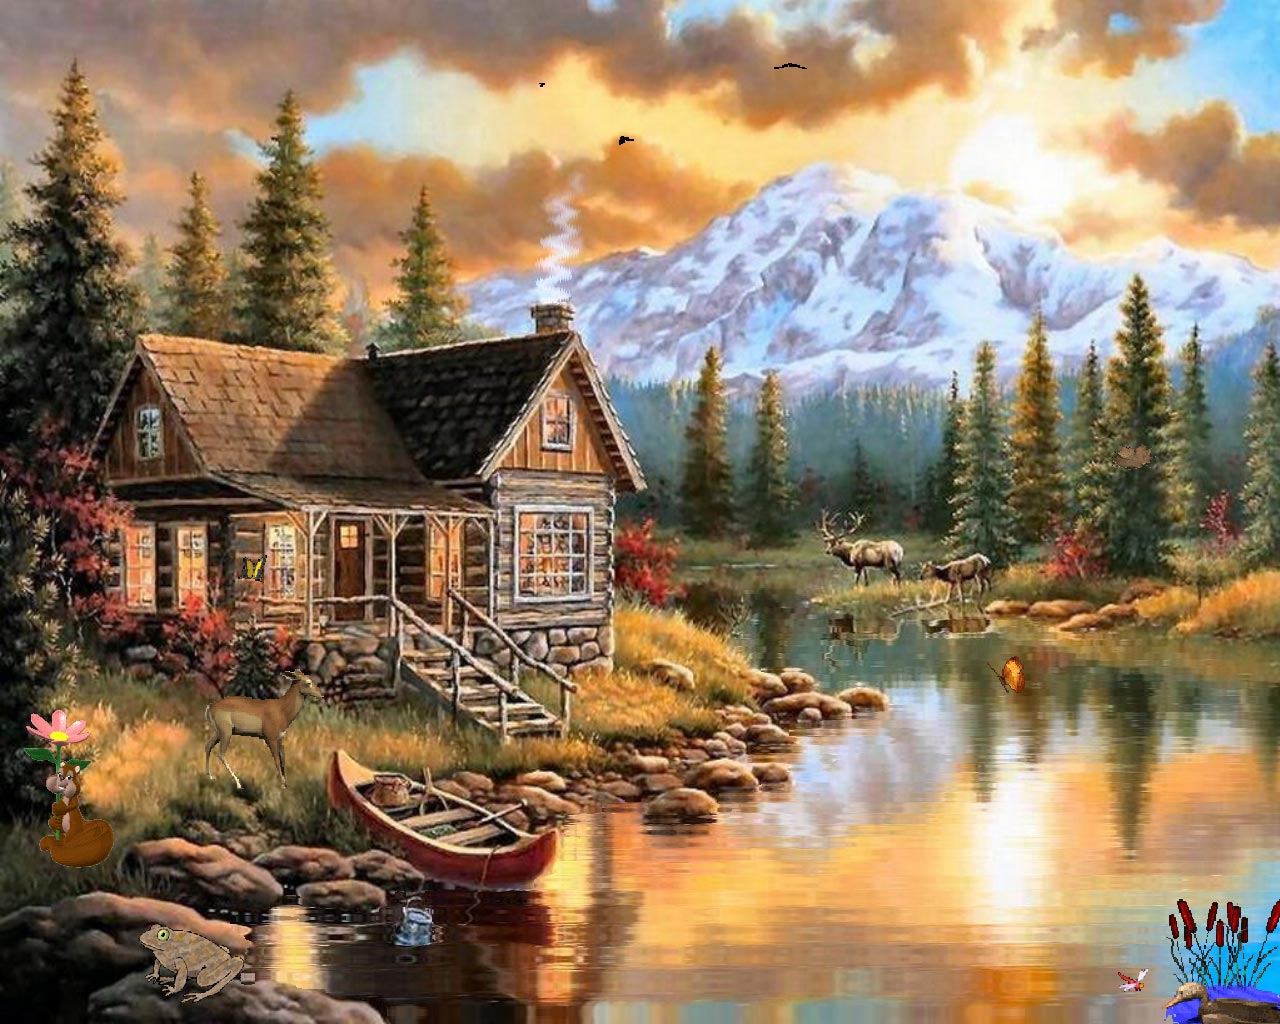 Cabin by the lake wallpaper   ForWallpapercom